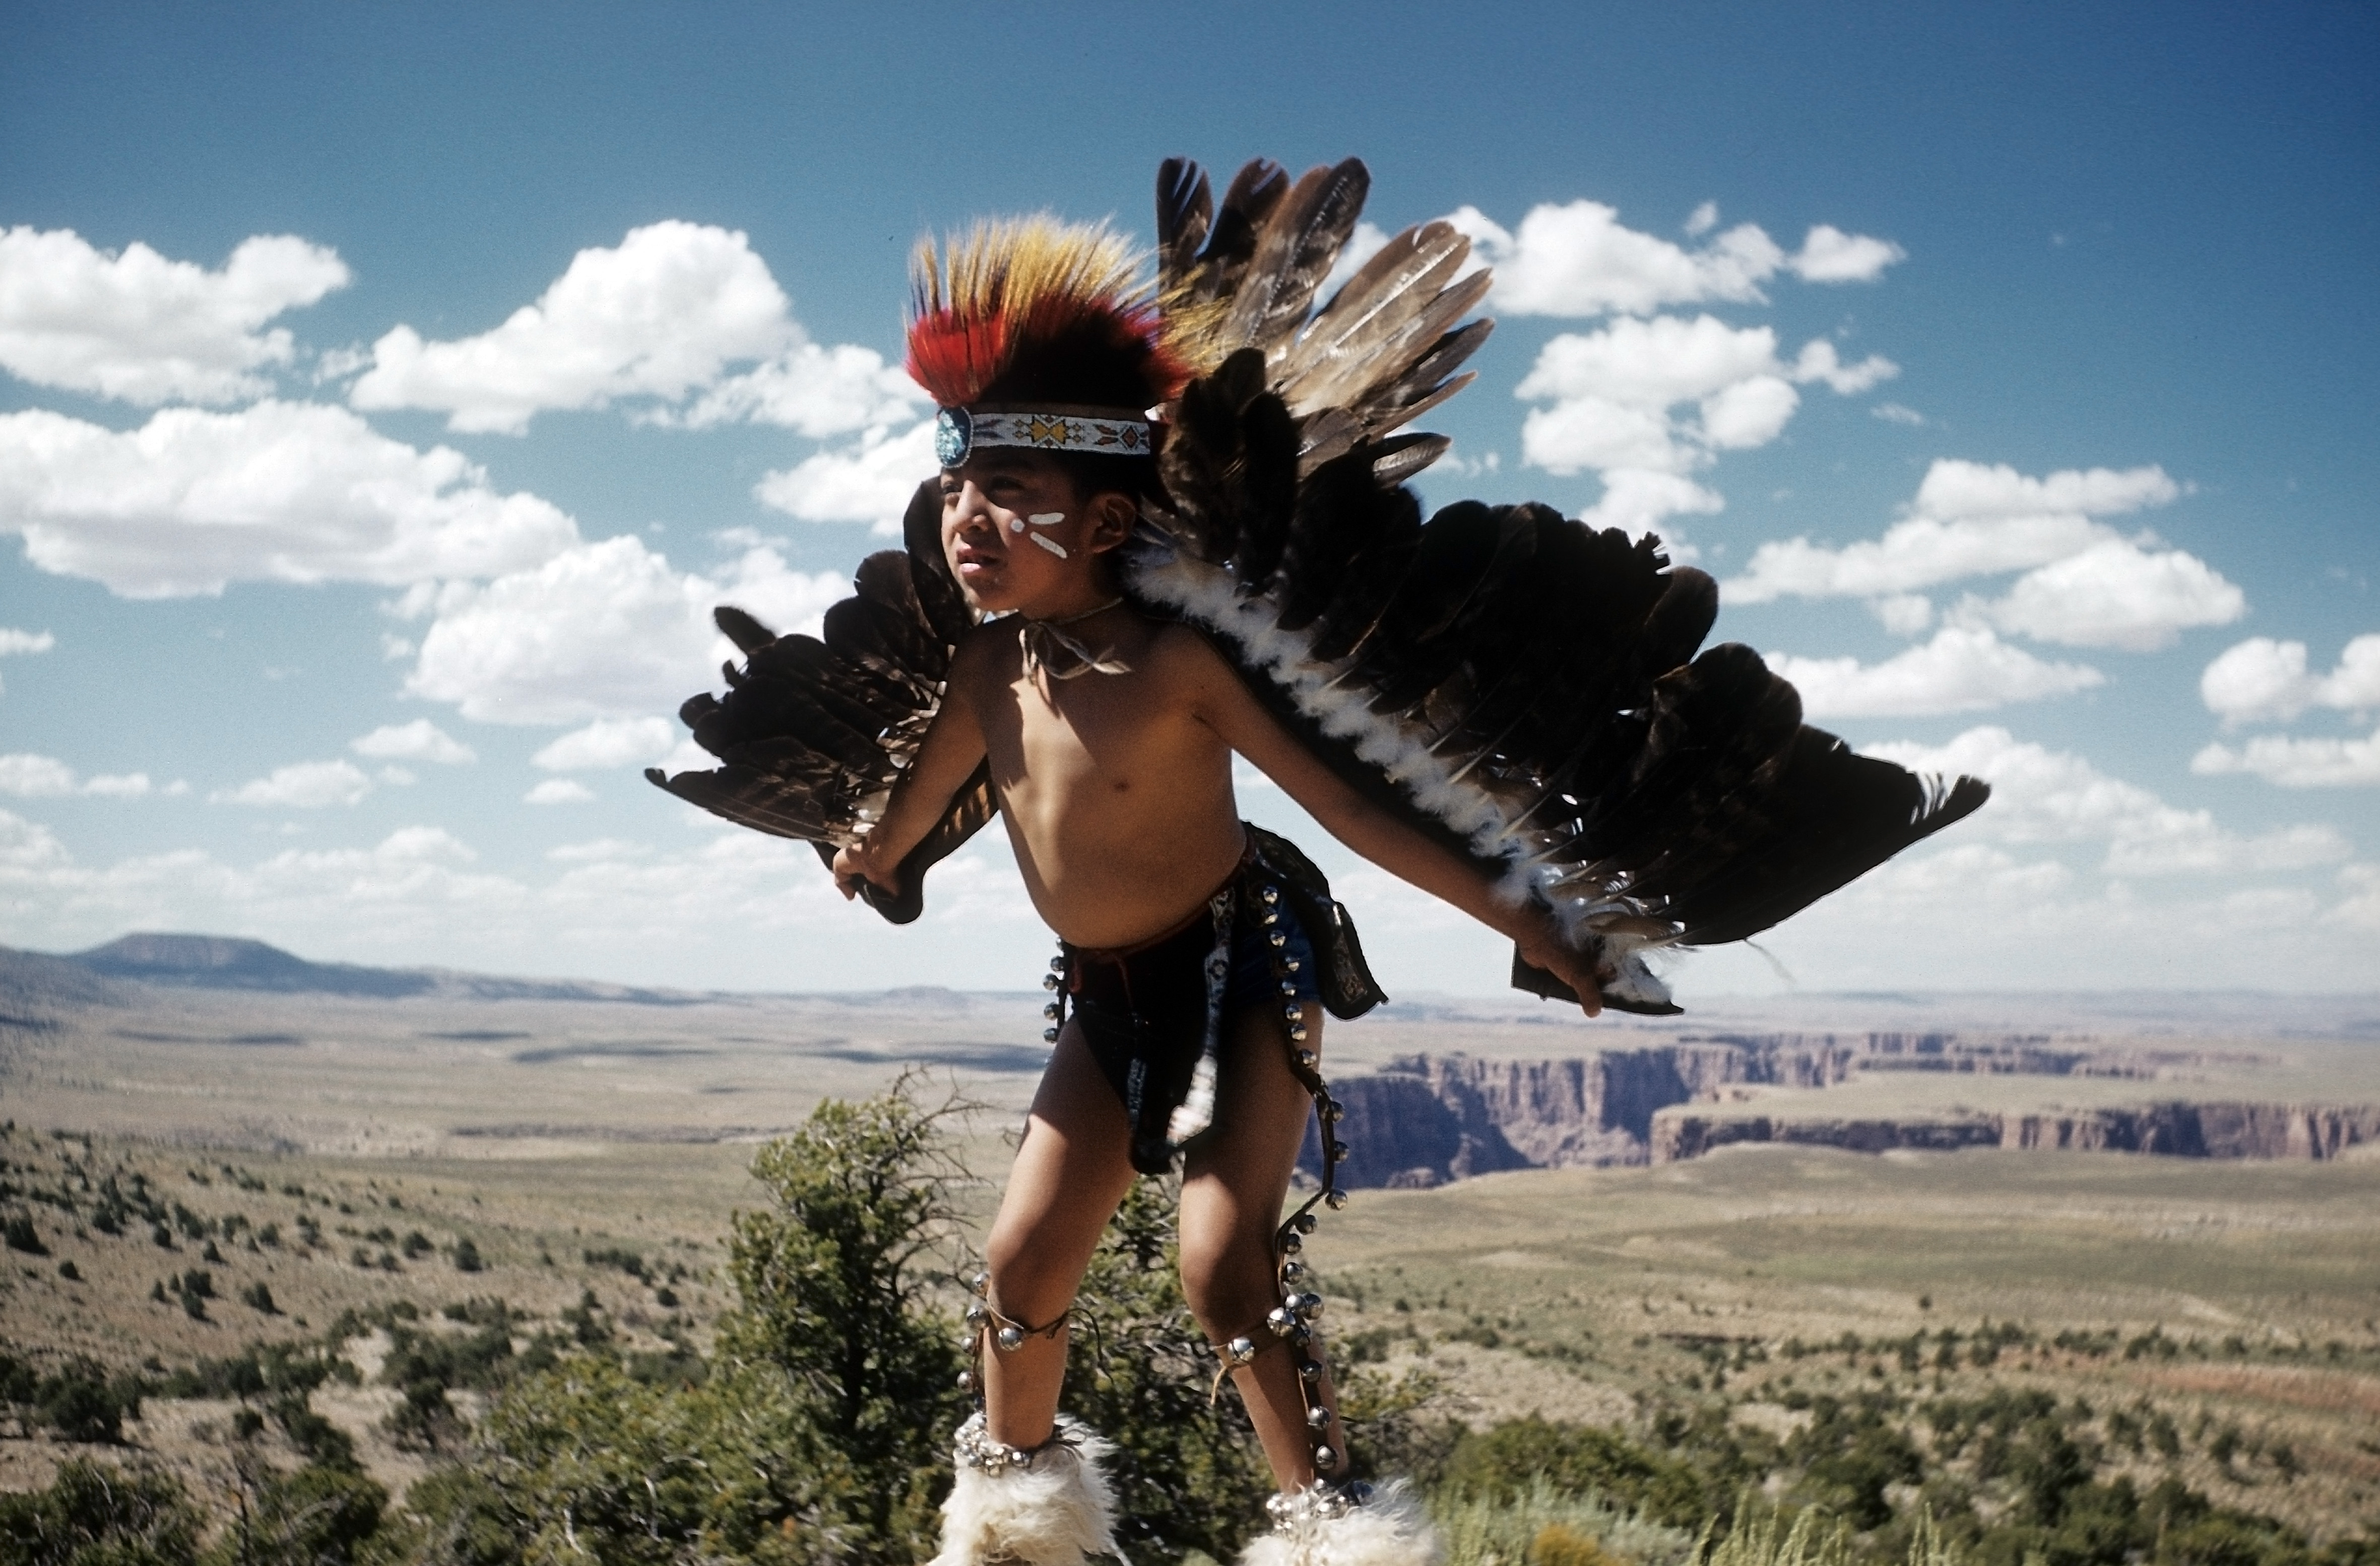 ARIZONA - JUNE 1952: A young Native American boy learns the Eagle Dance in Grand Canyon National Park, Arizona.